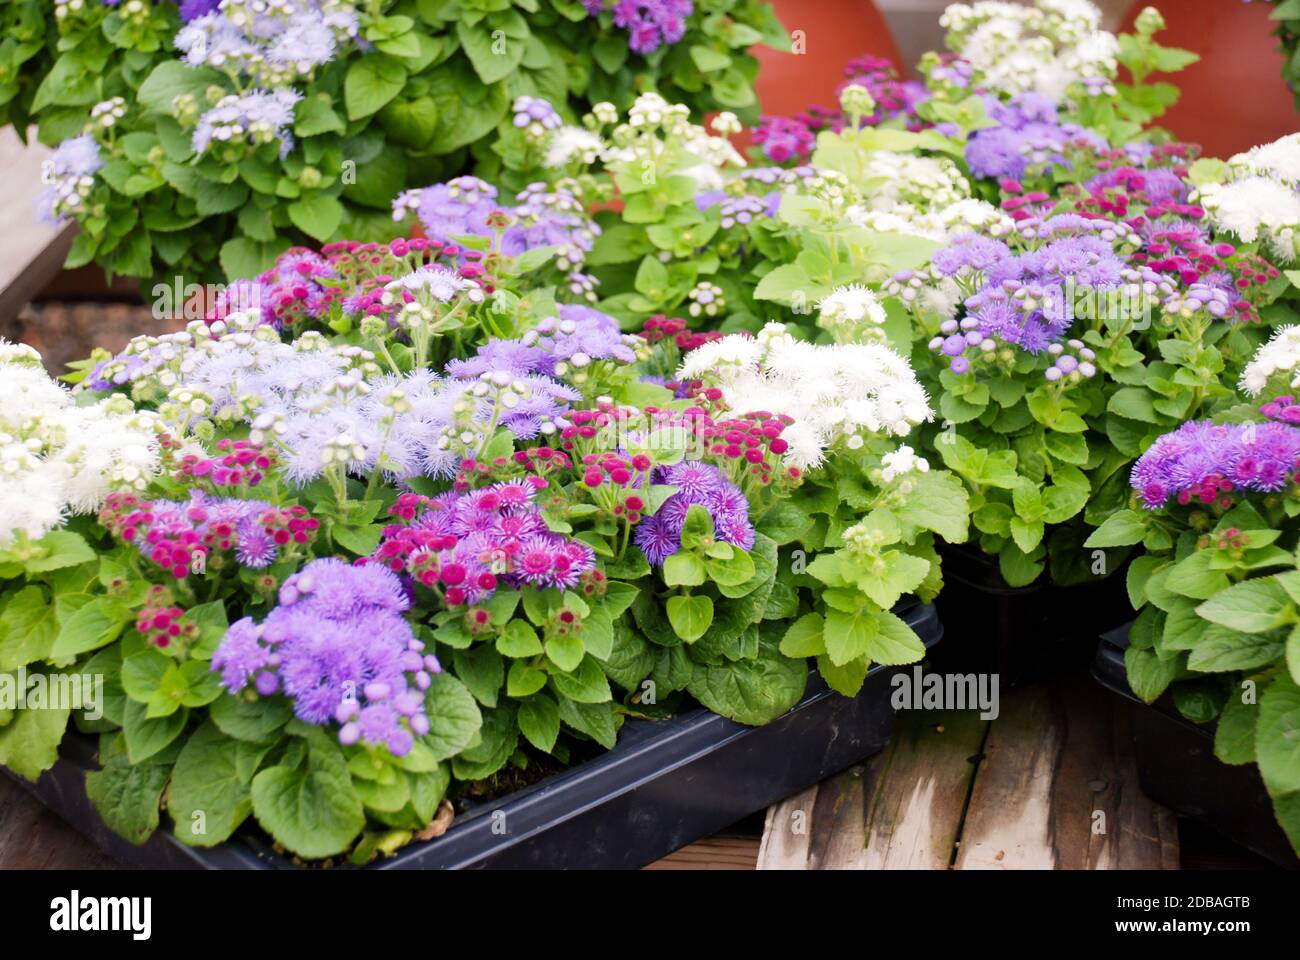 Ageratum, Mixed ageratum, Mixed color pot plants in the black tray. Stock Photo